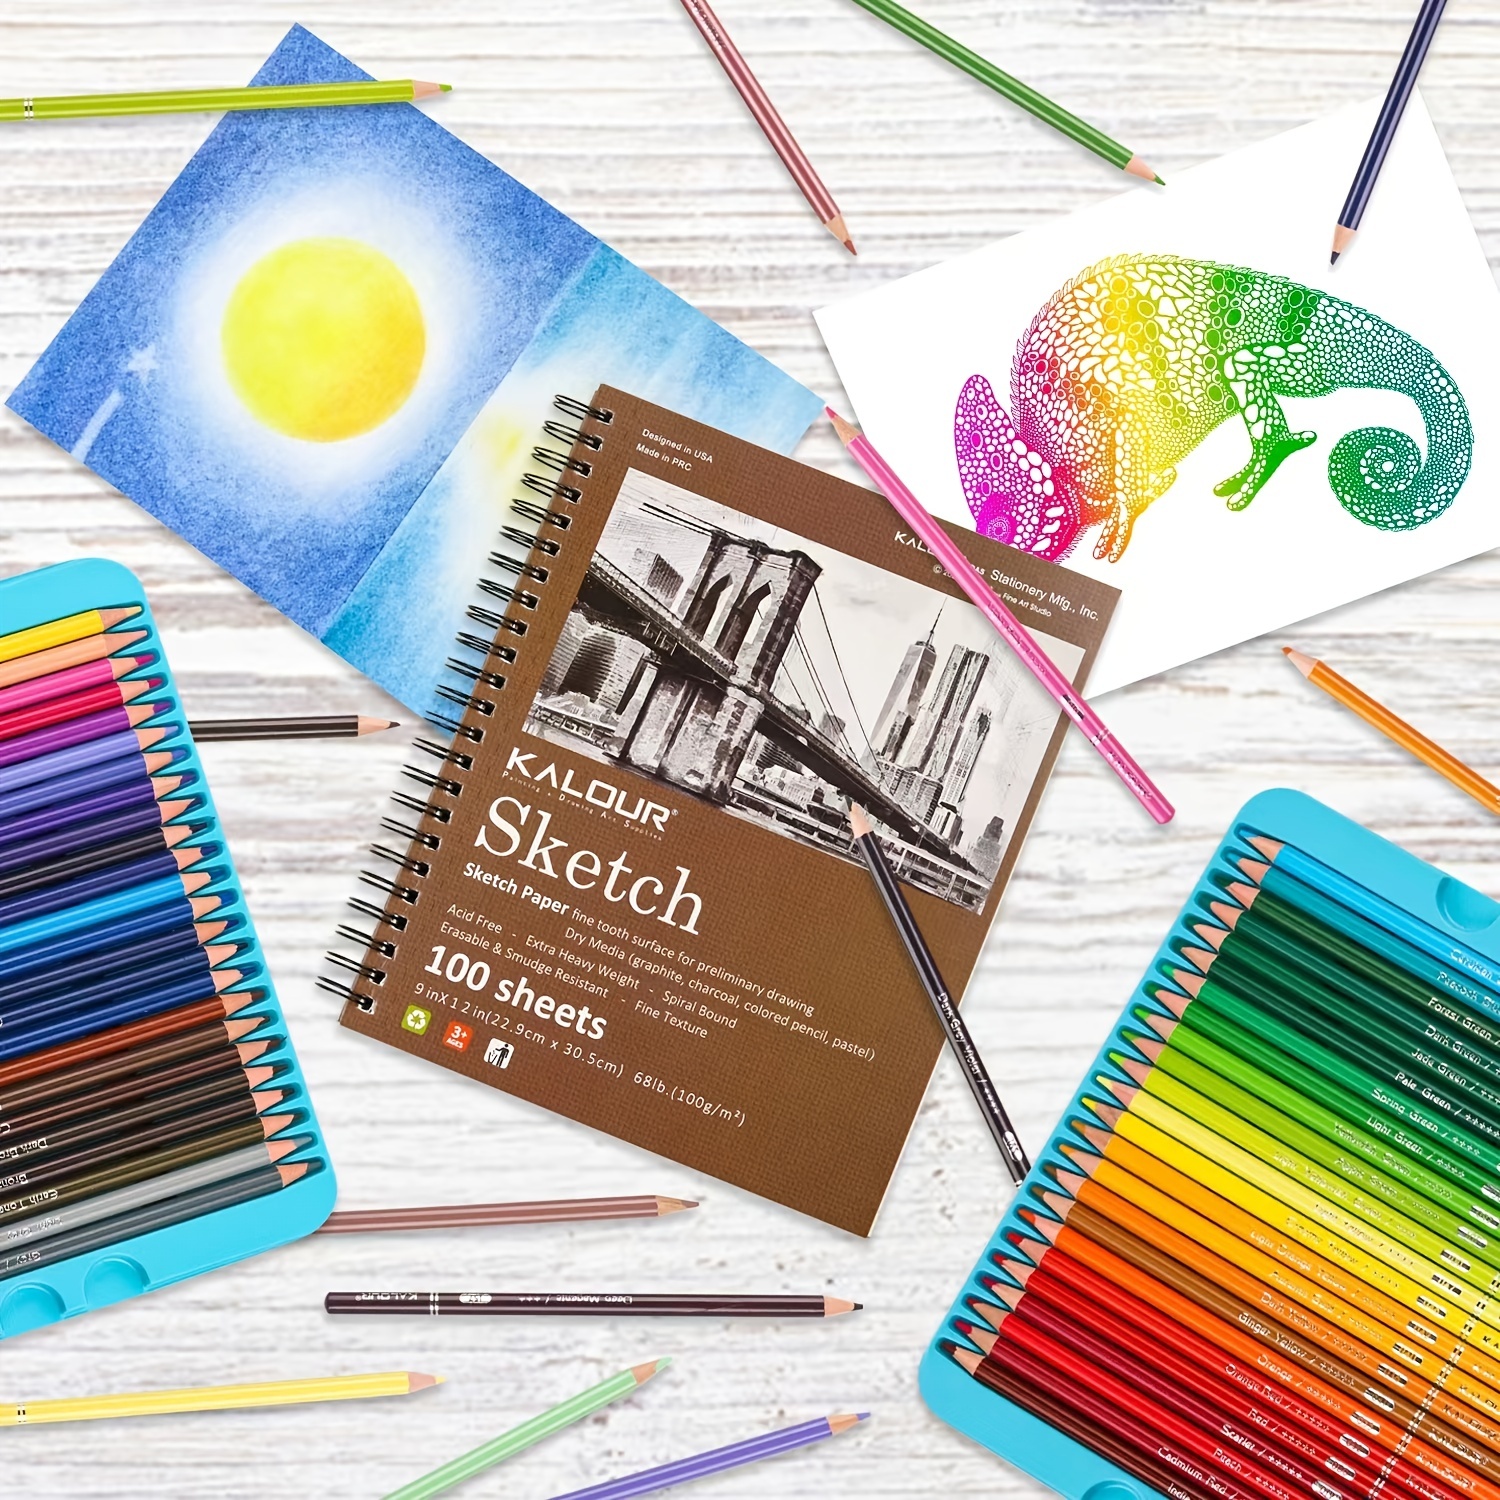 Sketchbook And Pencil